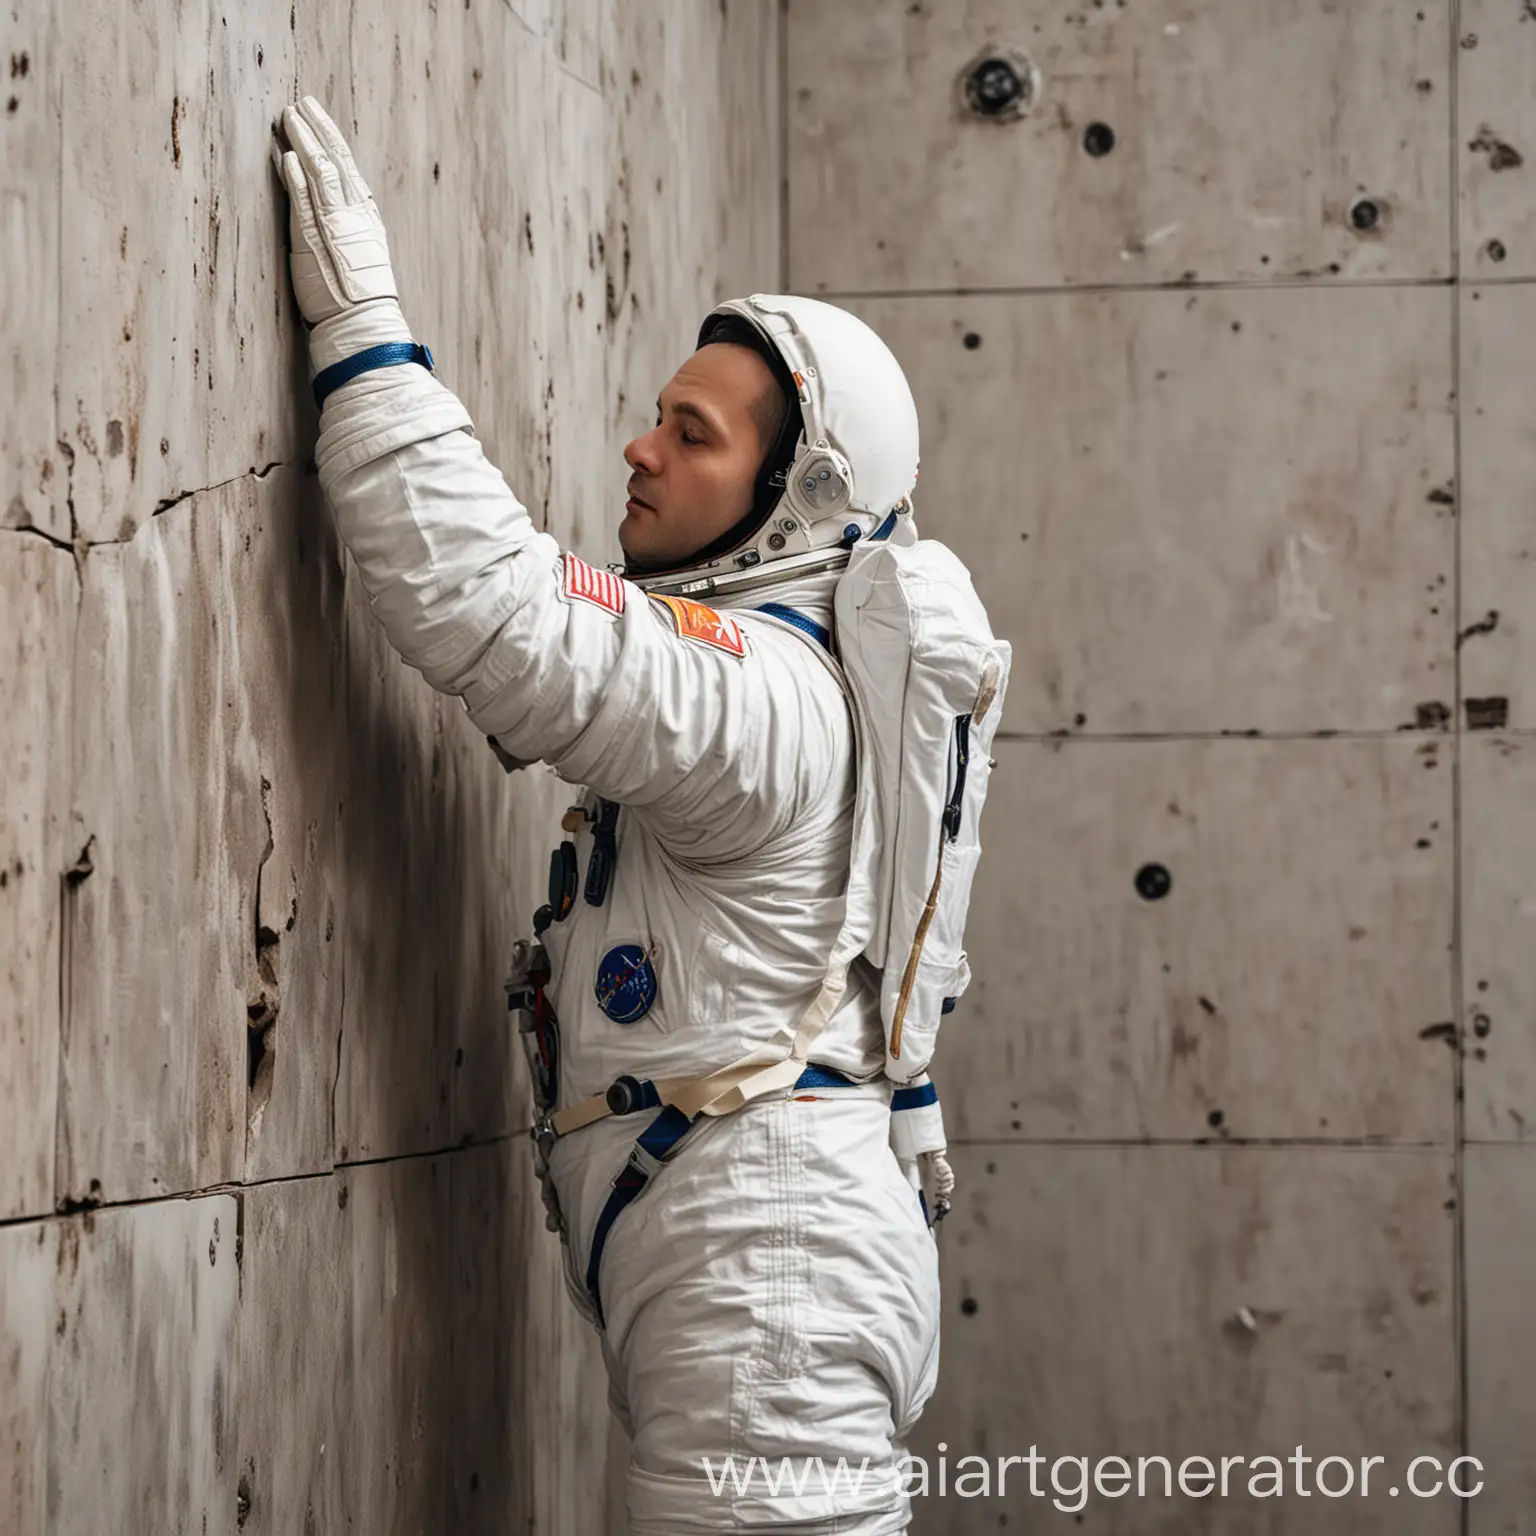 Cosmonaut touching the wall
